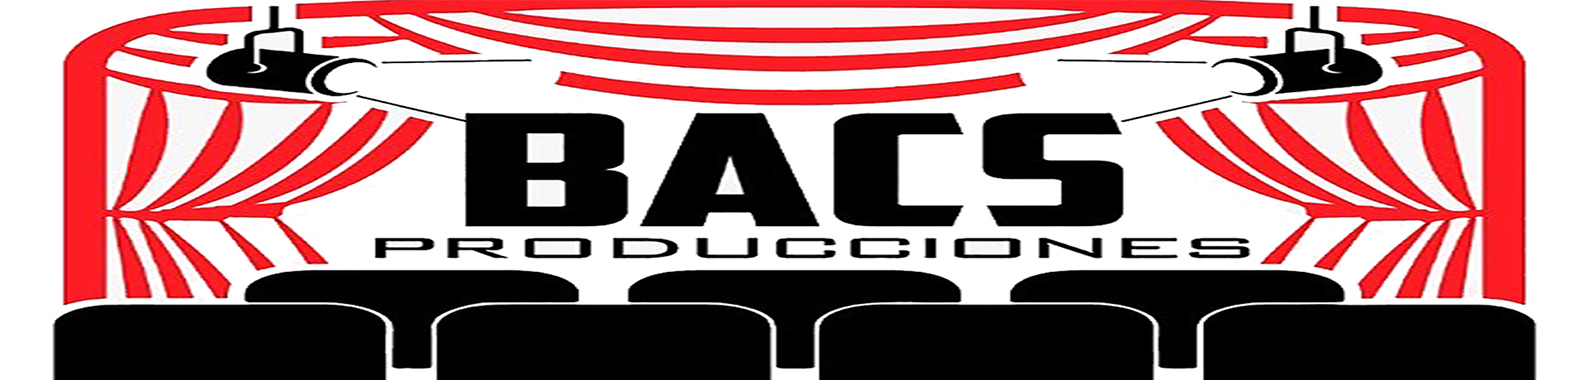 Banner BACS Producciones